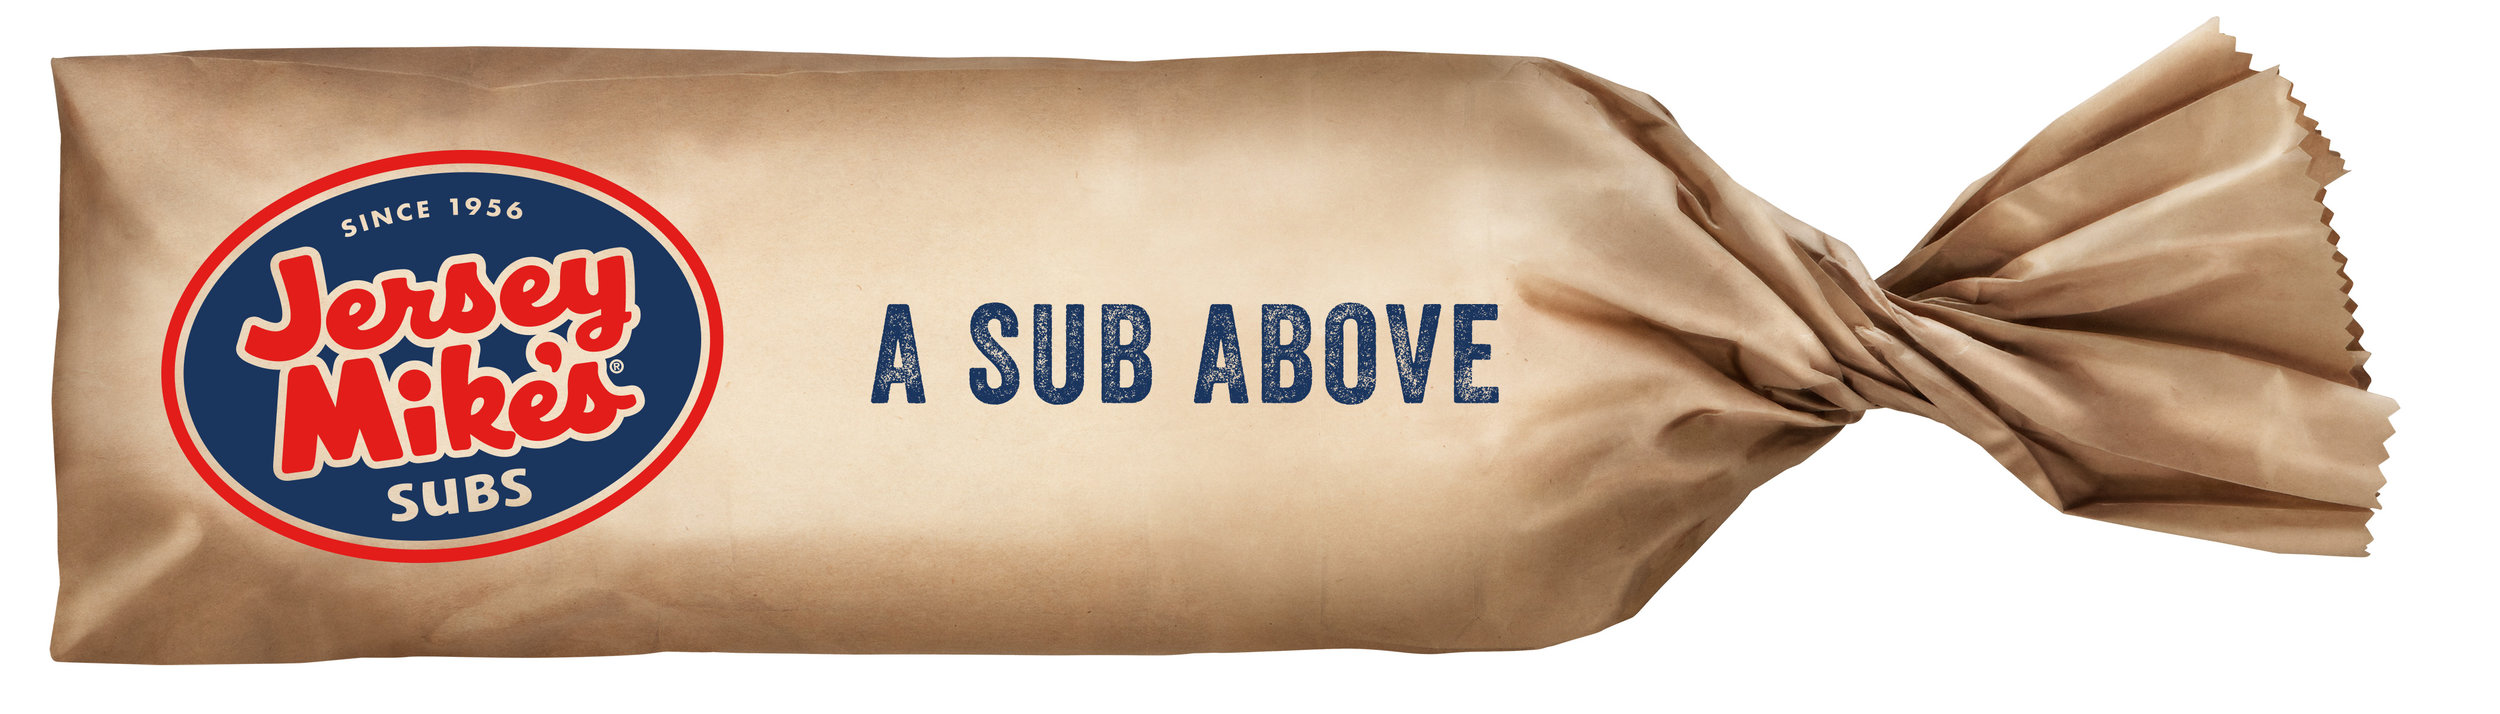 sub above